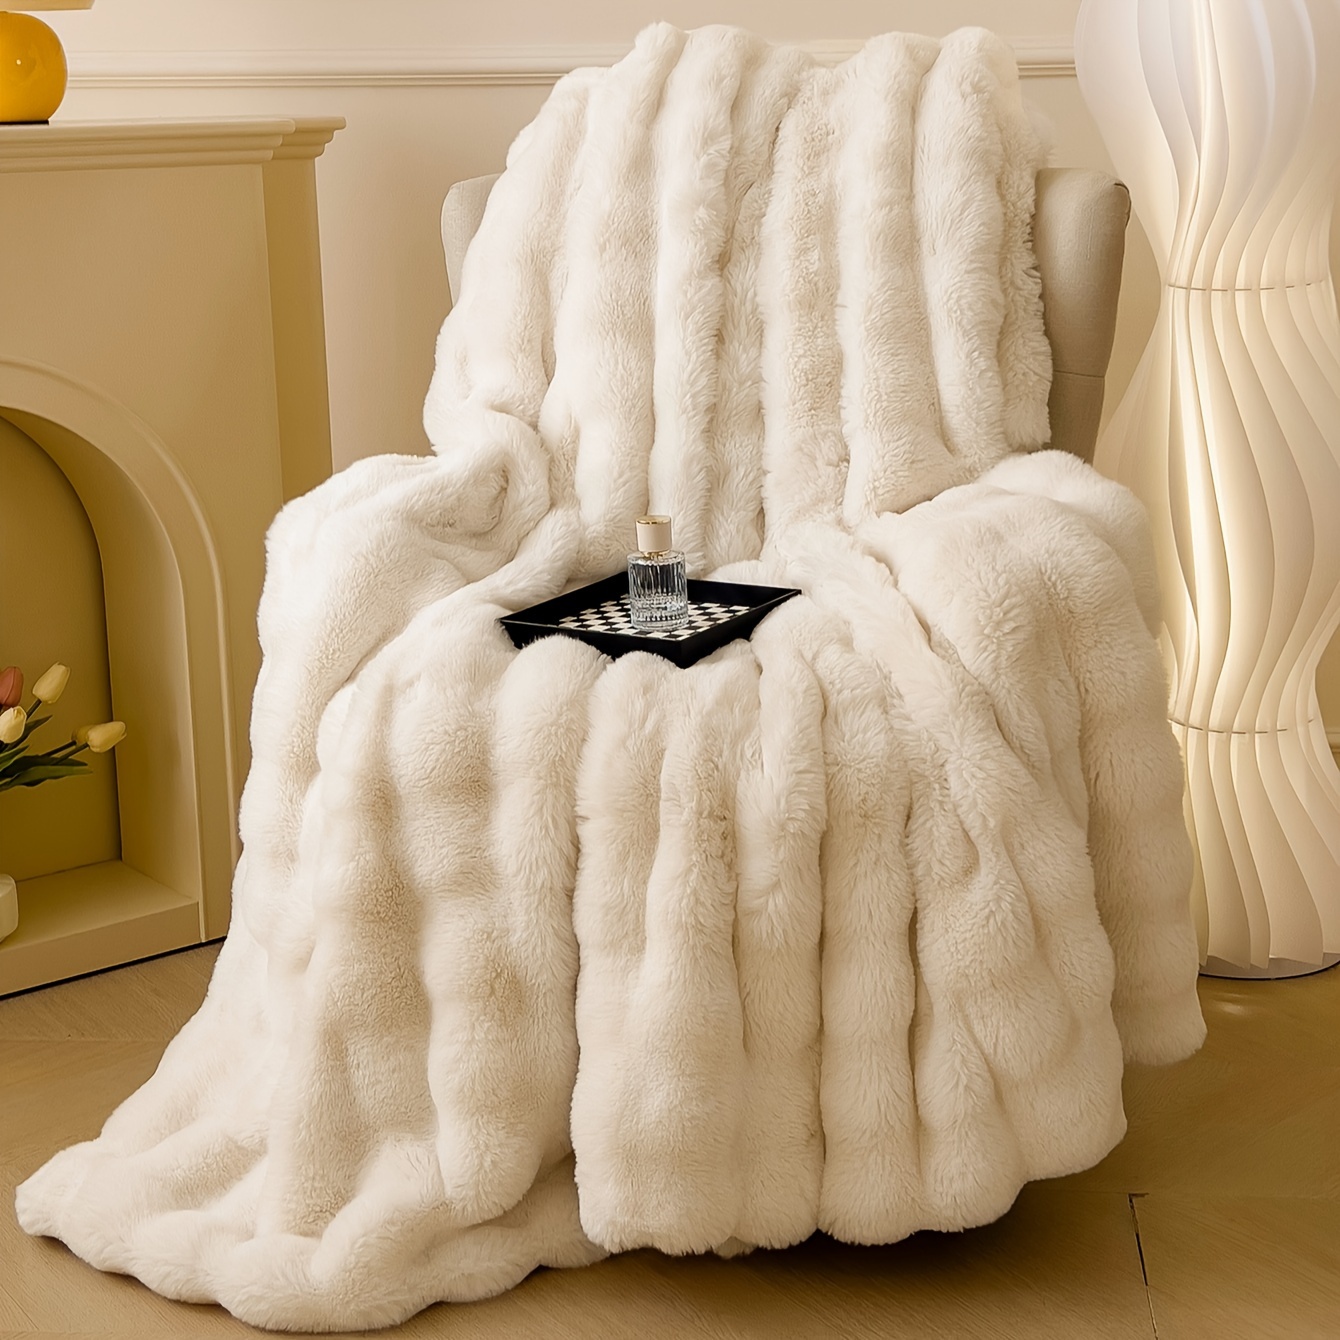 50 x 60 300GSM Brushed Polar Fleece Blanket - For Sublimation Printing